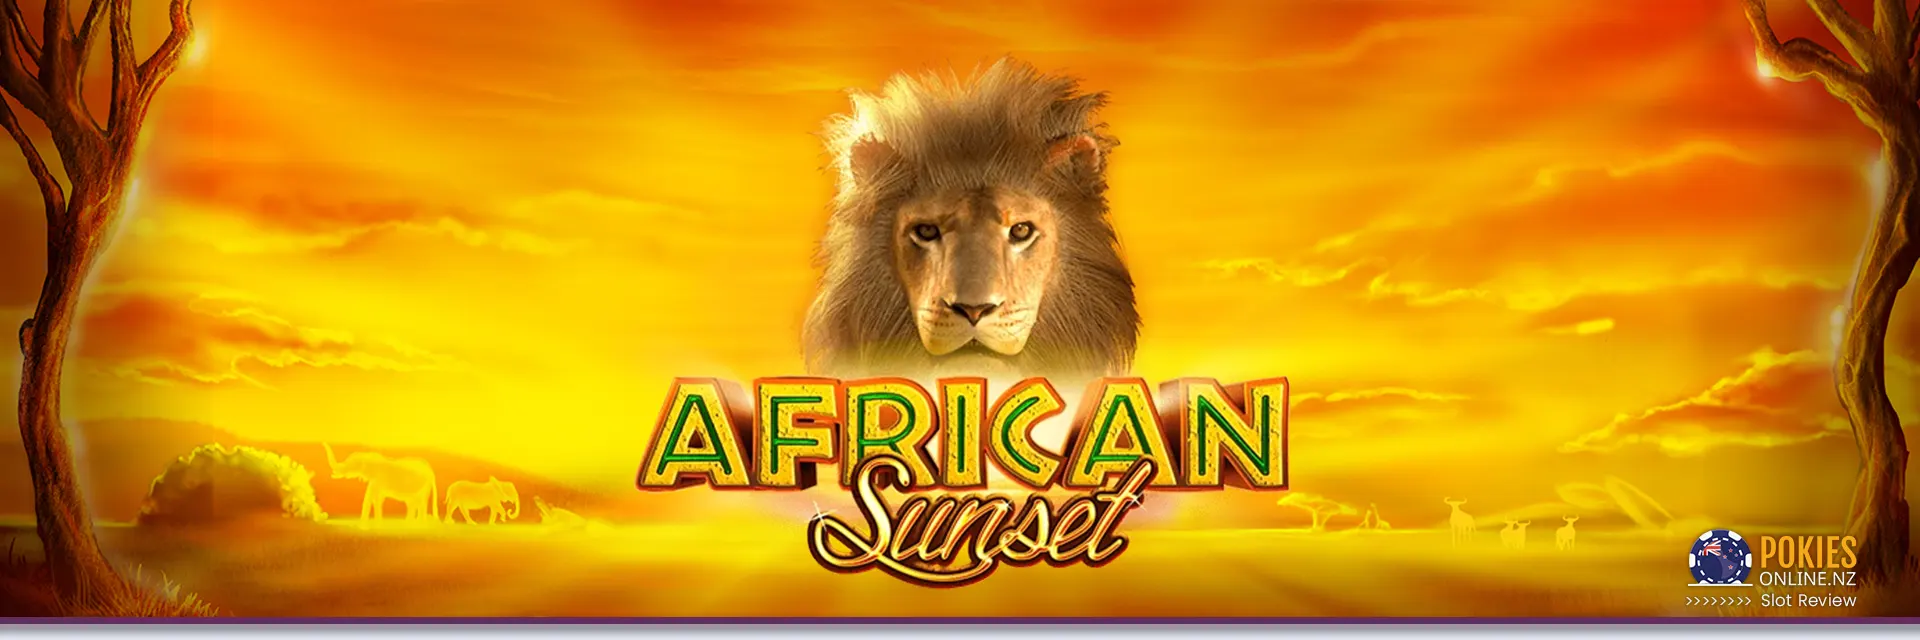 African Sunset slot Banner